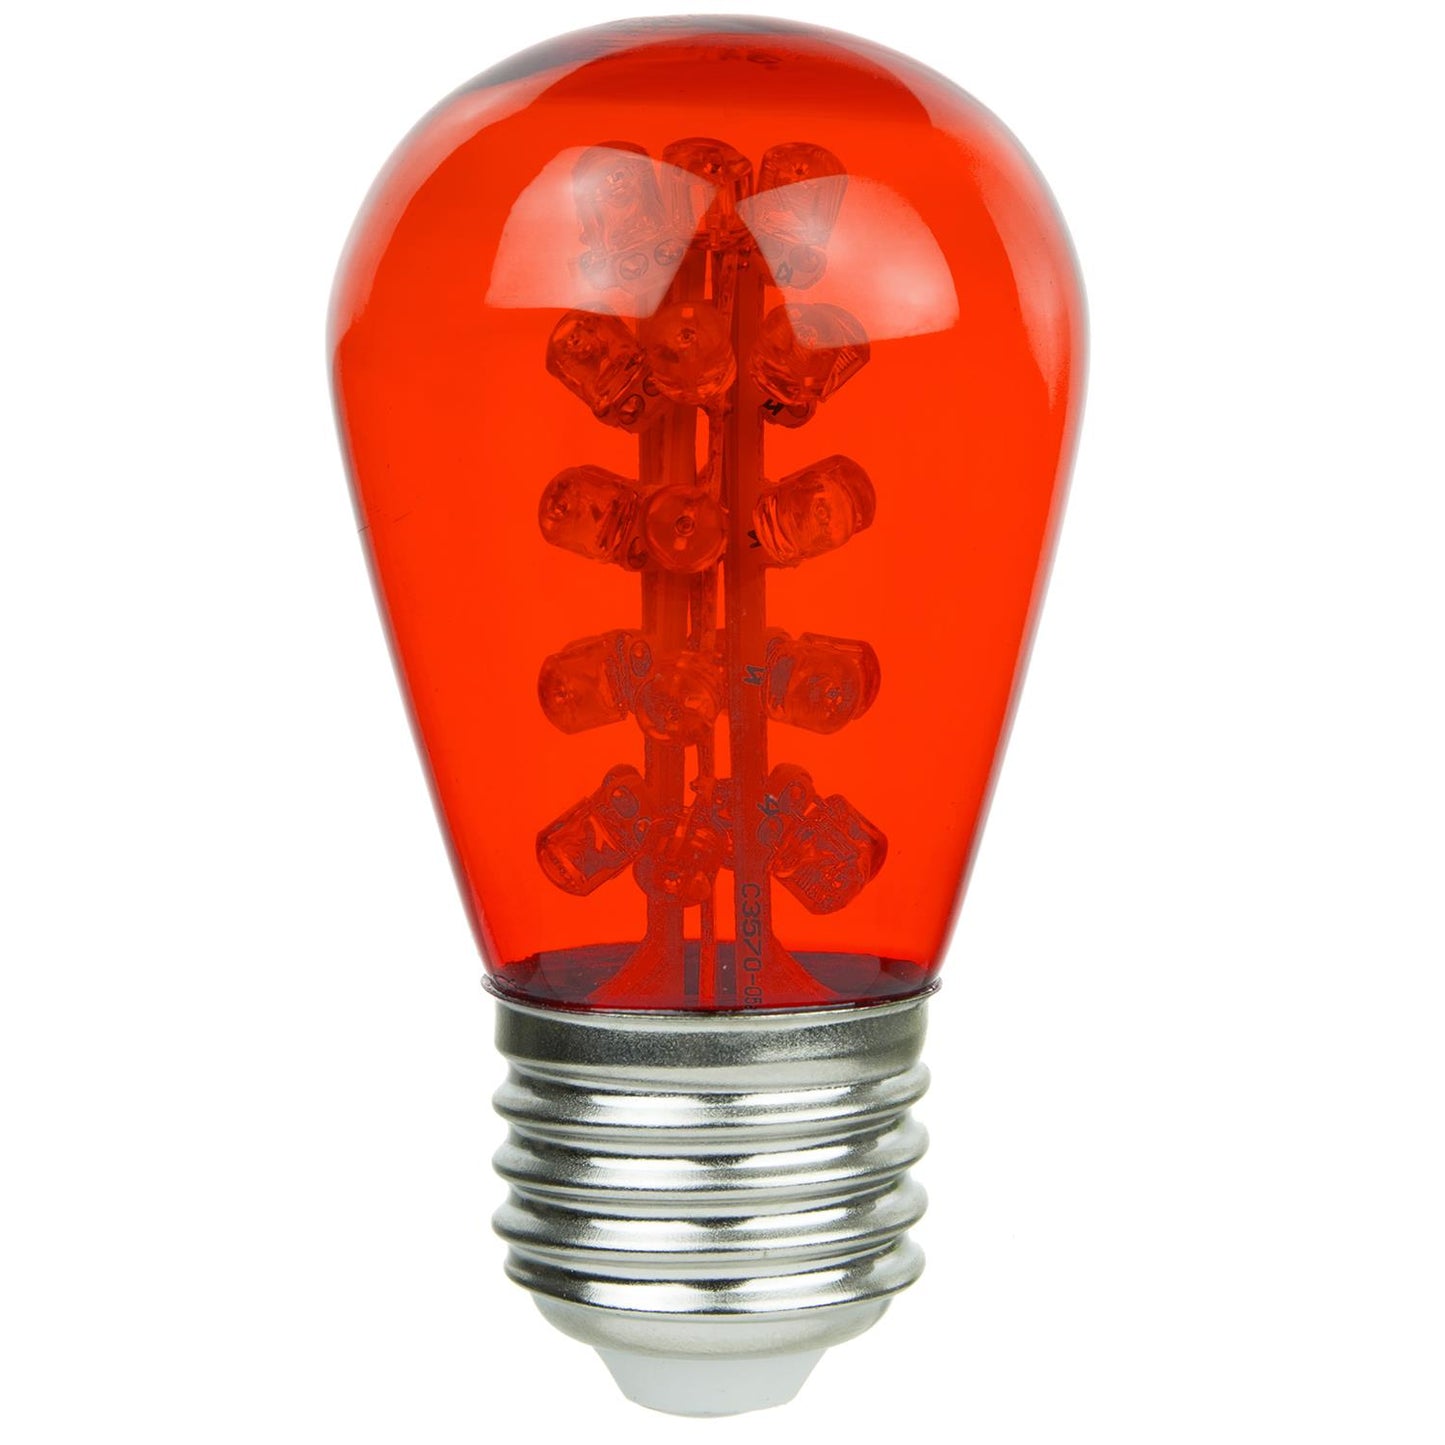 Sunlite LED S14 Colored Sign 0.9W (10W Equivalent) Bulb Medium (E26) Base, Red